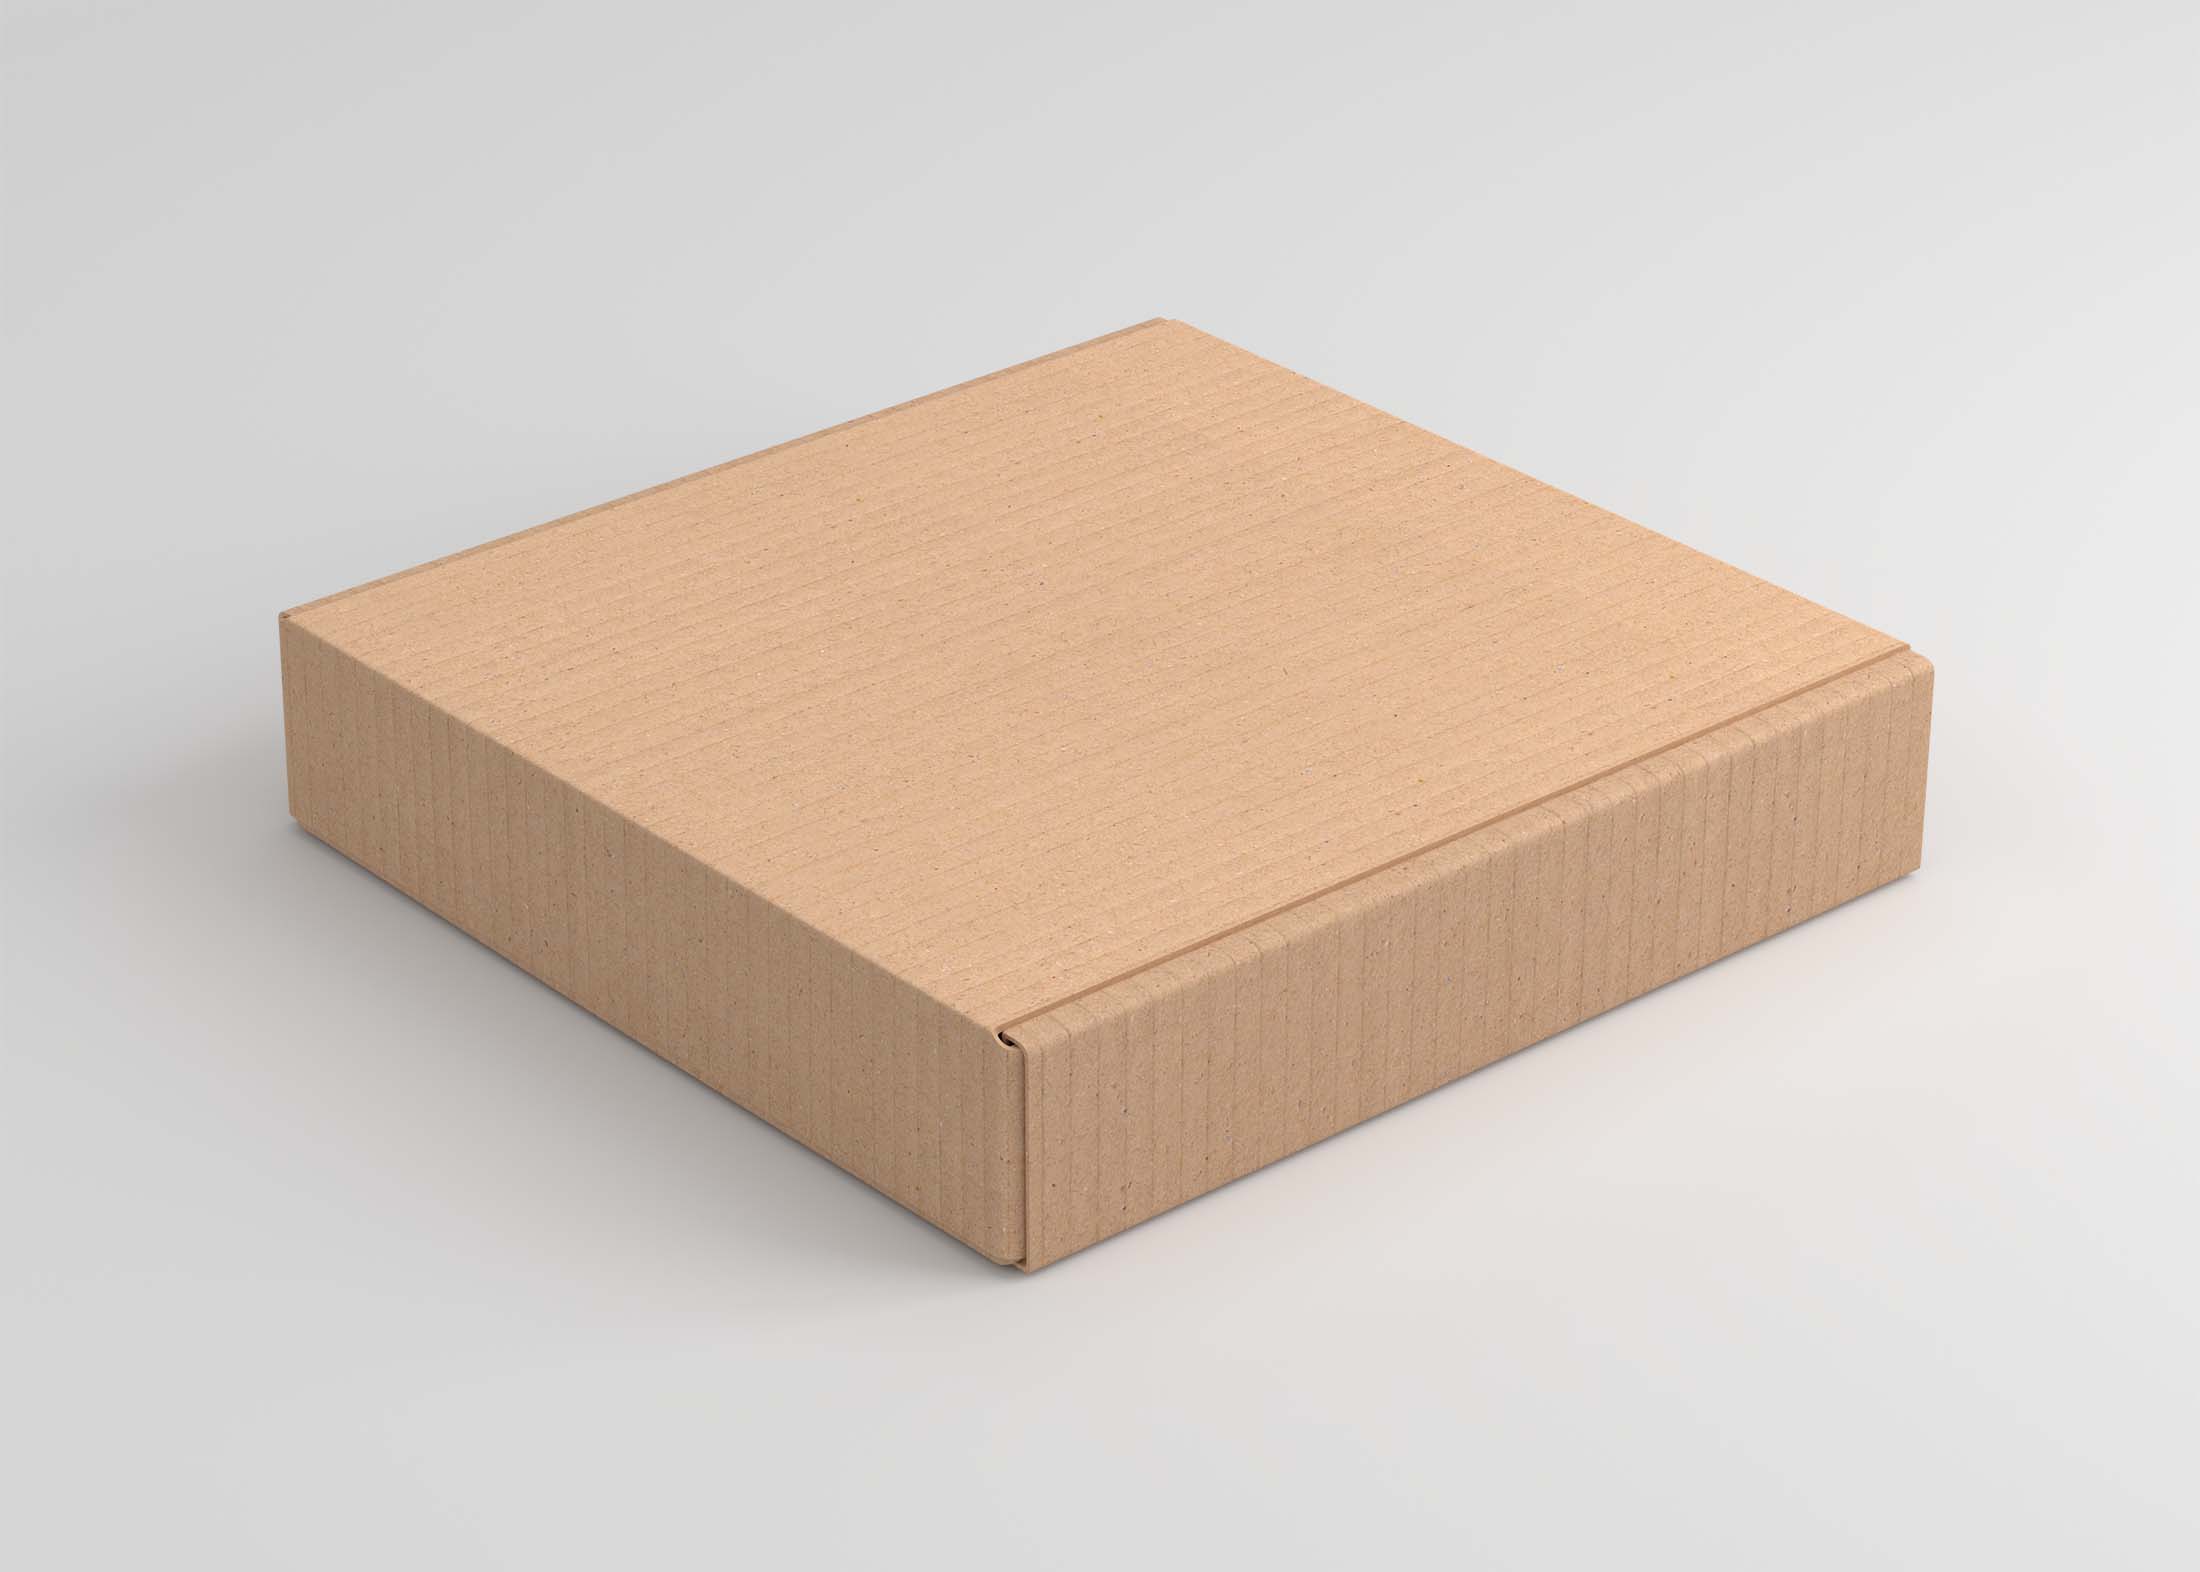 Free Pizza Box Packaging Mockup